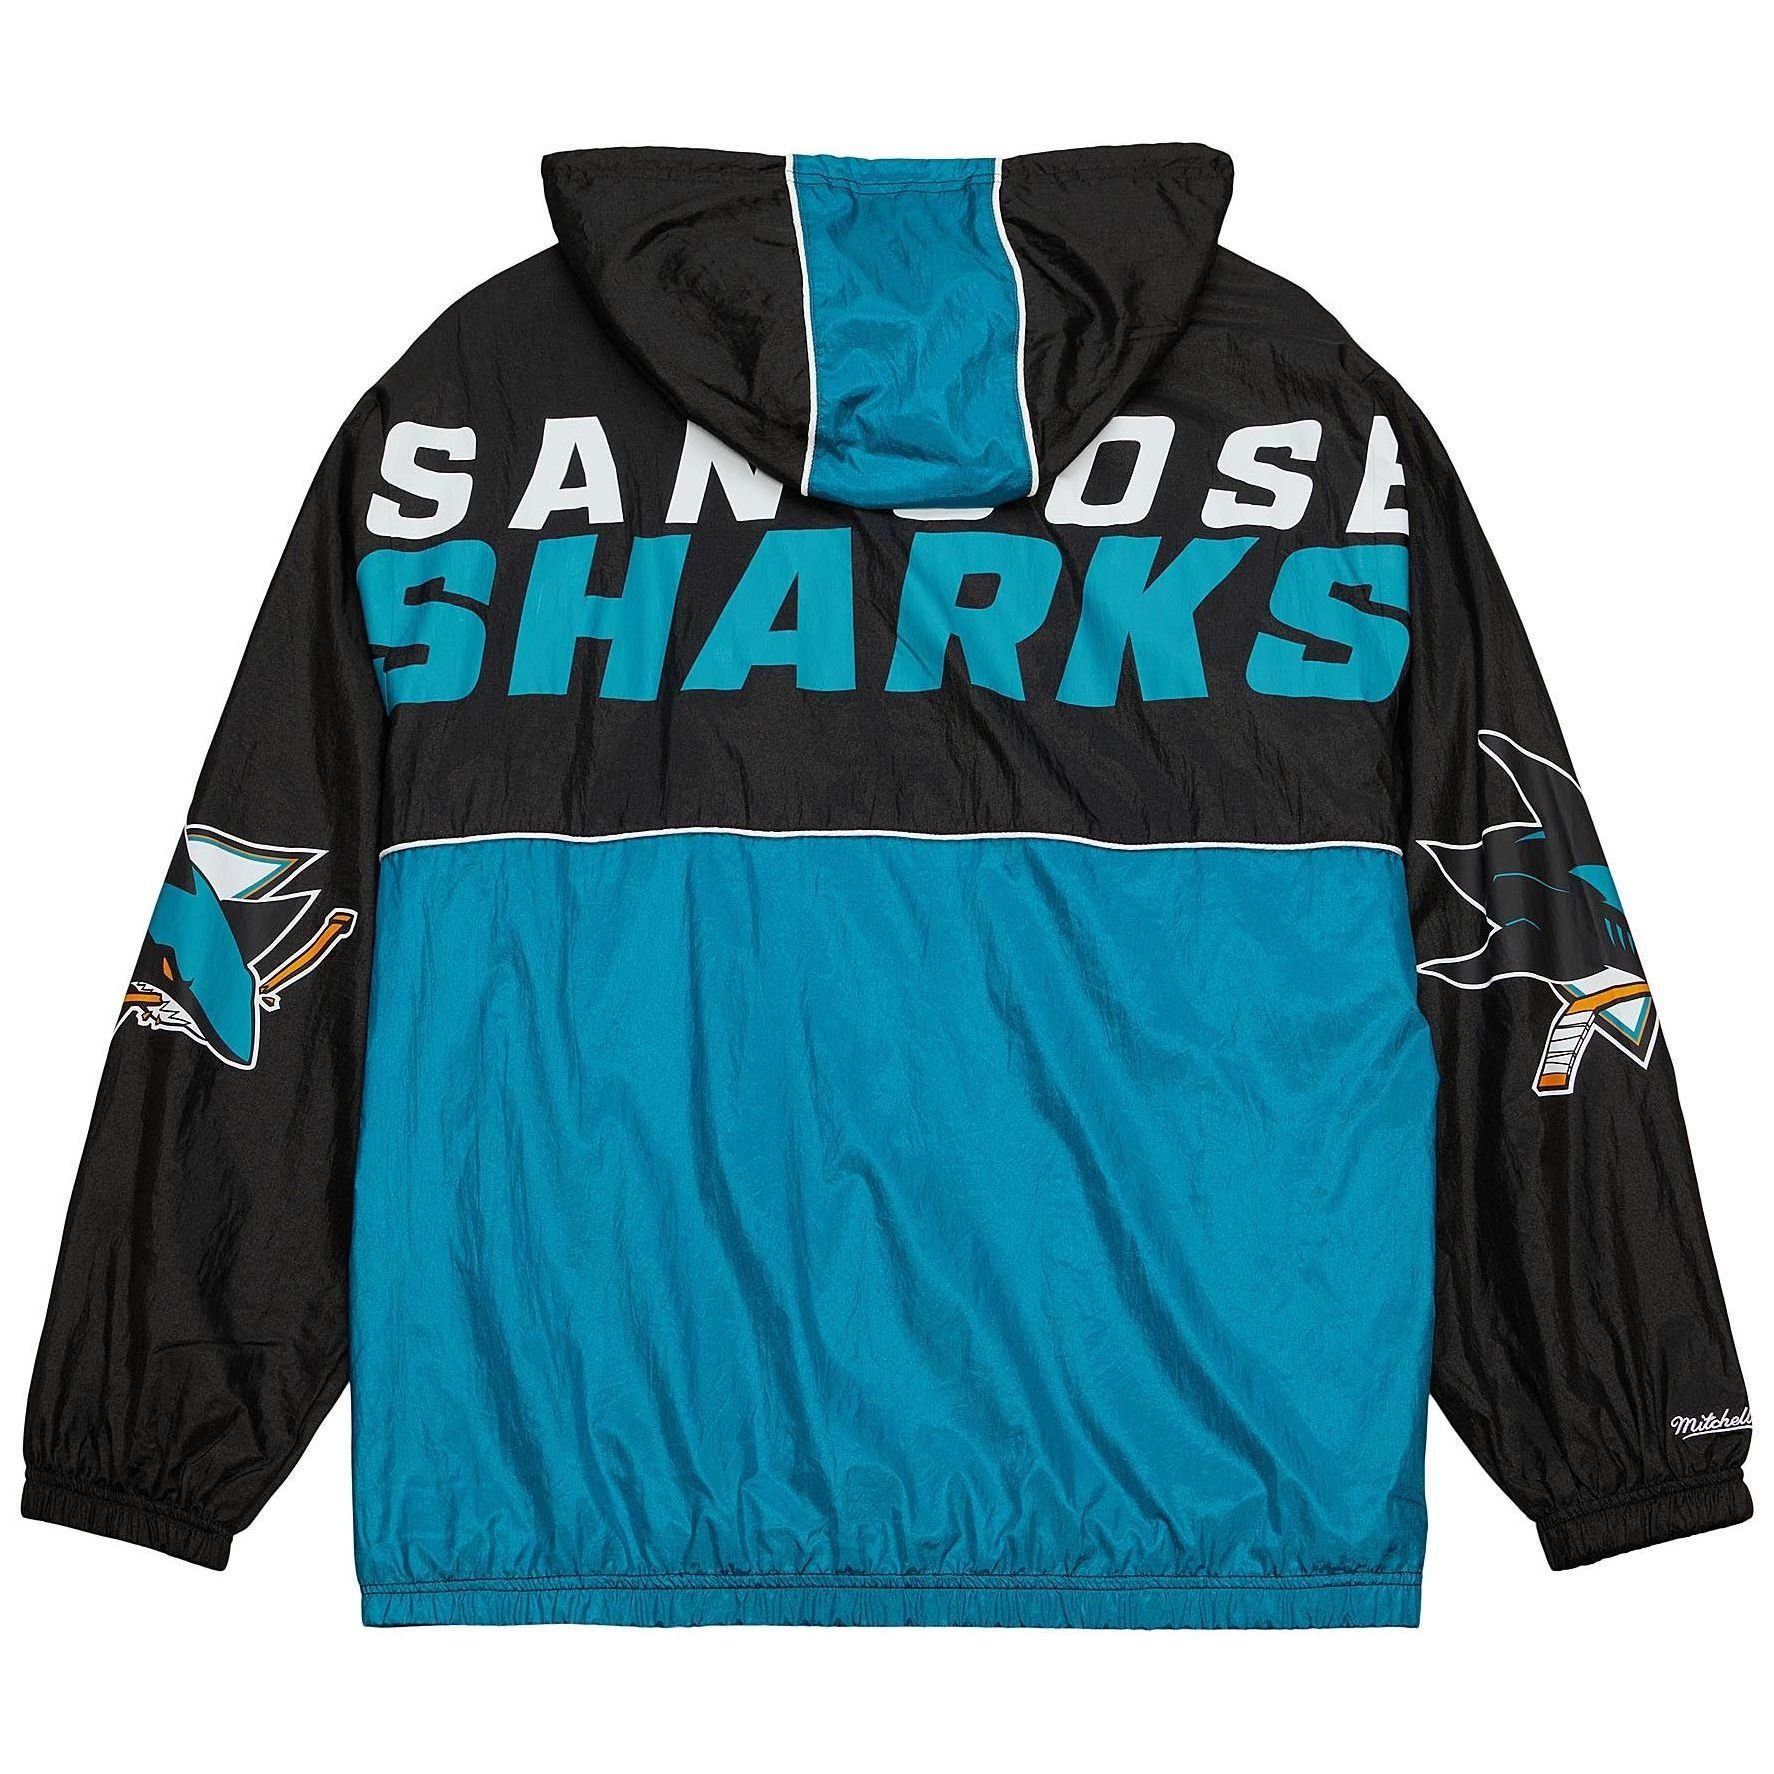 ORIGINS Anorak Mitchell Ness Sharks San & Jose Windbreaker